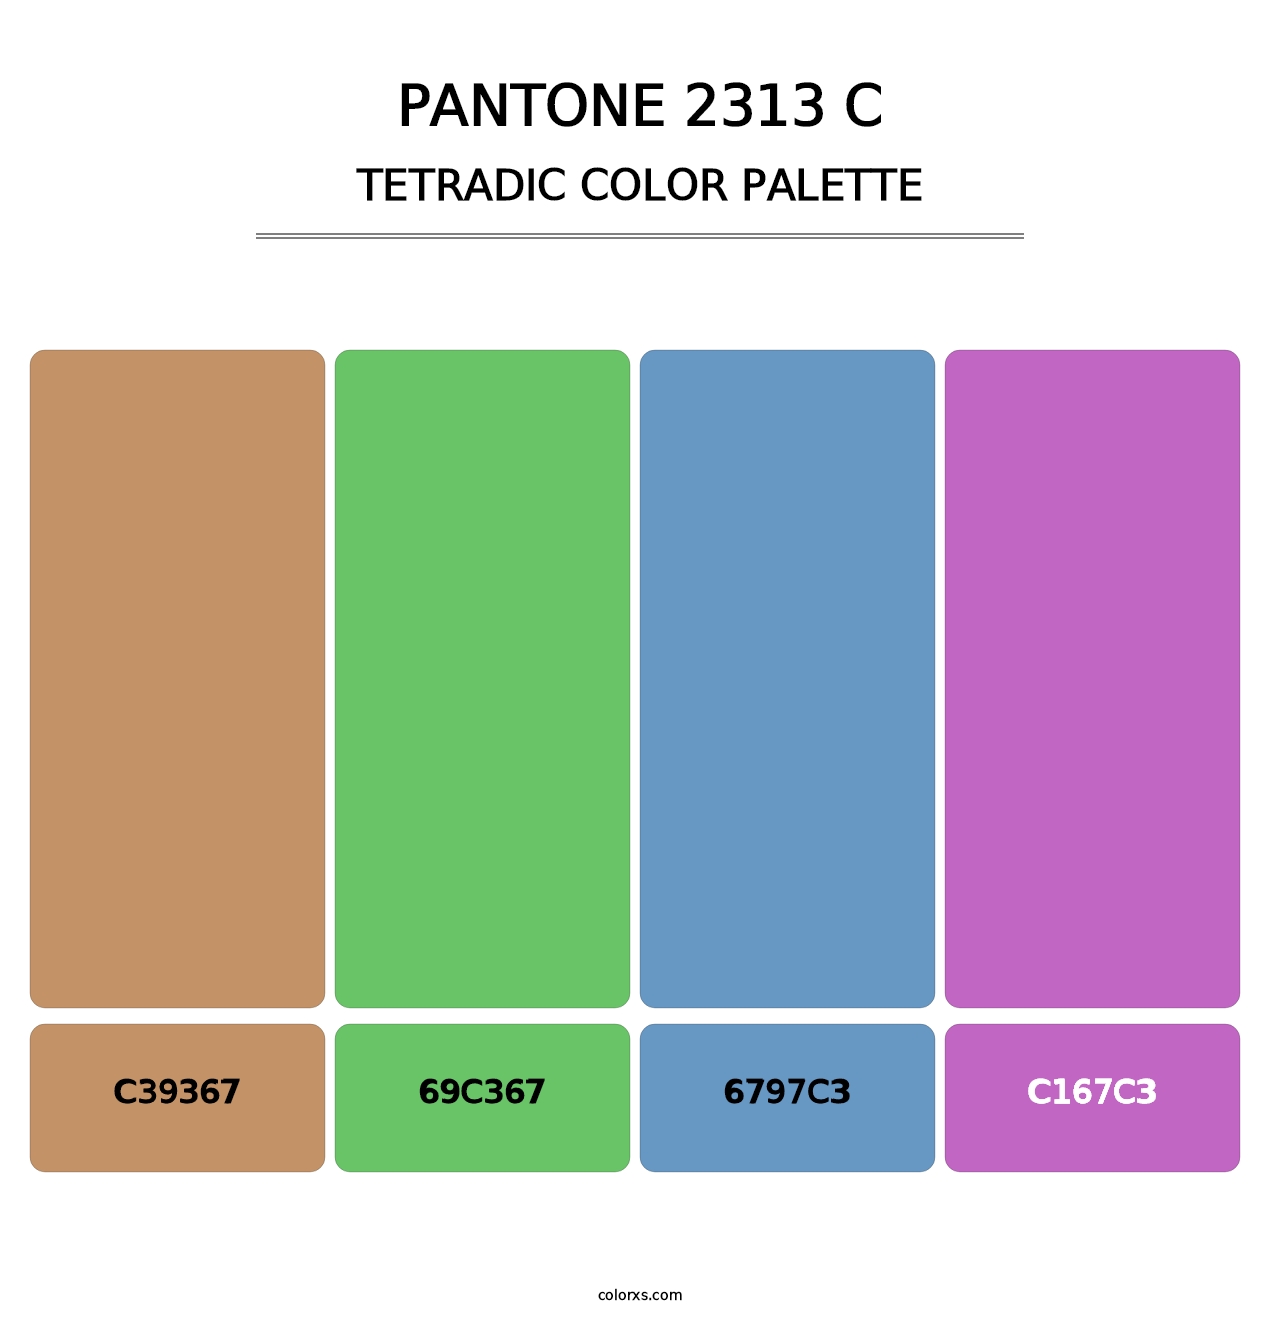 PANTONE 2313 C - Tetradic Color Palette